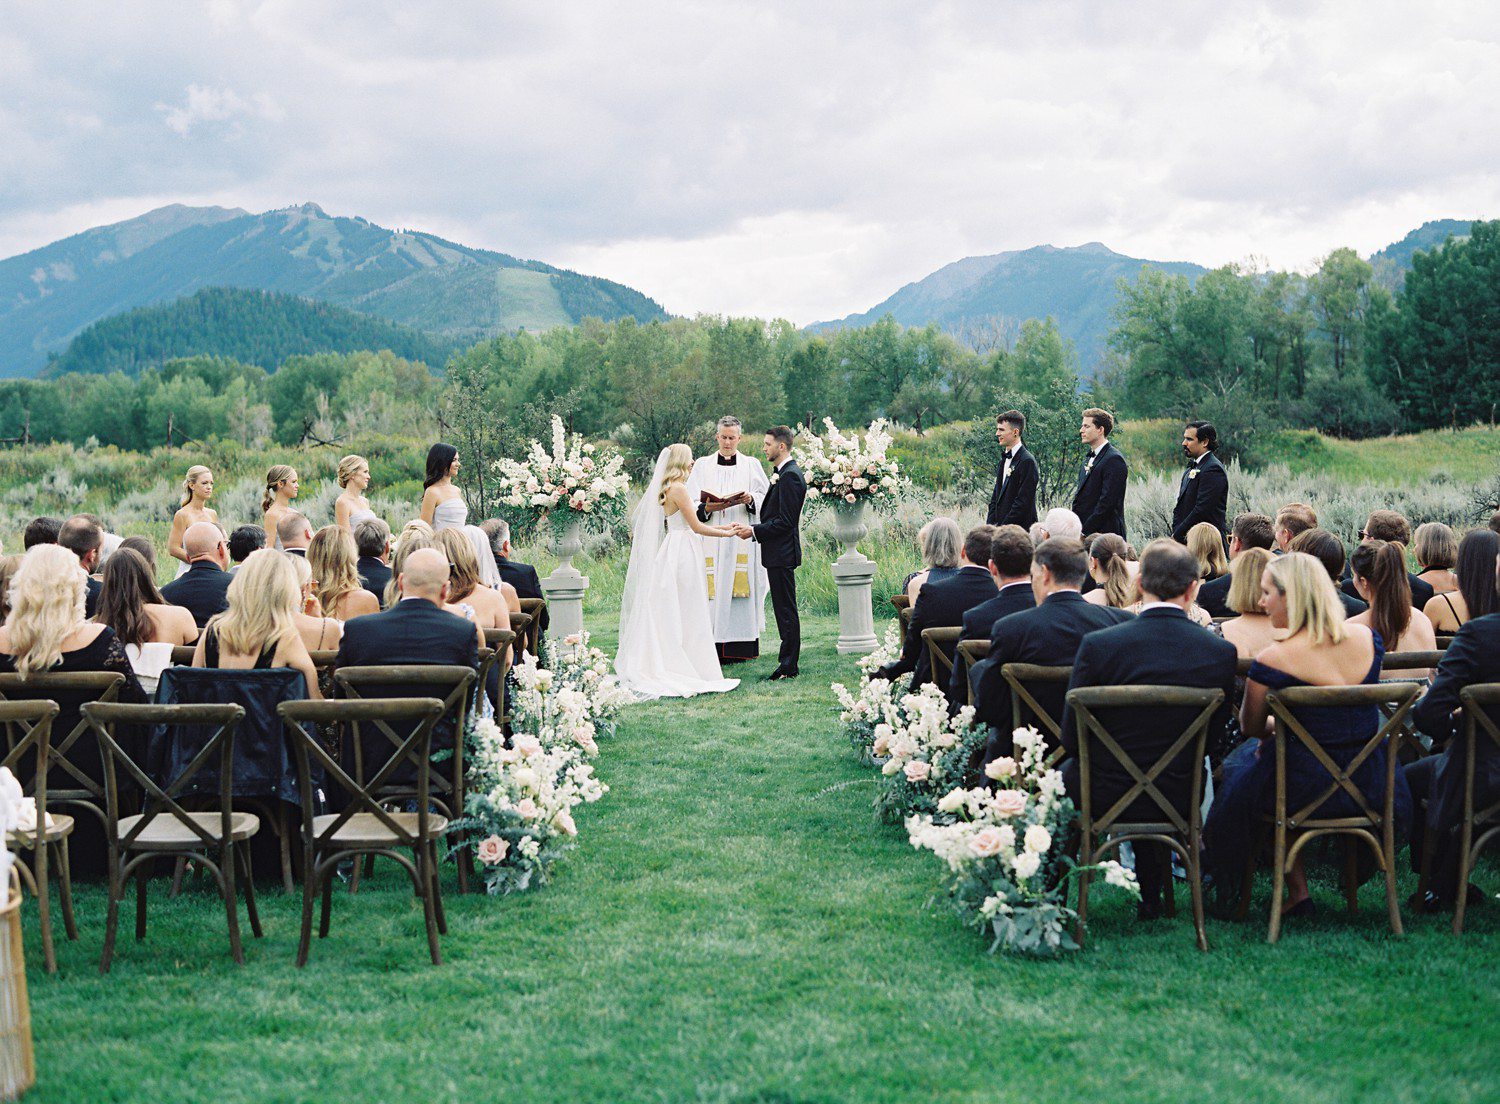 Wedding ceremony at Aspen Meadows Resort.